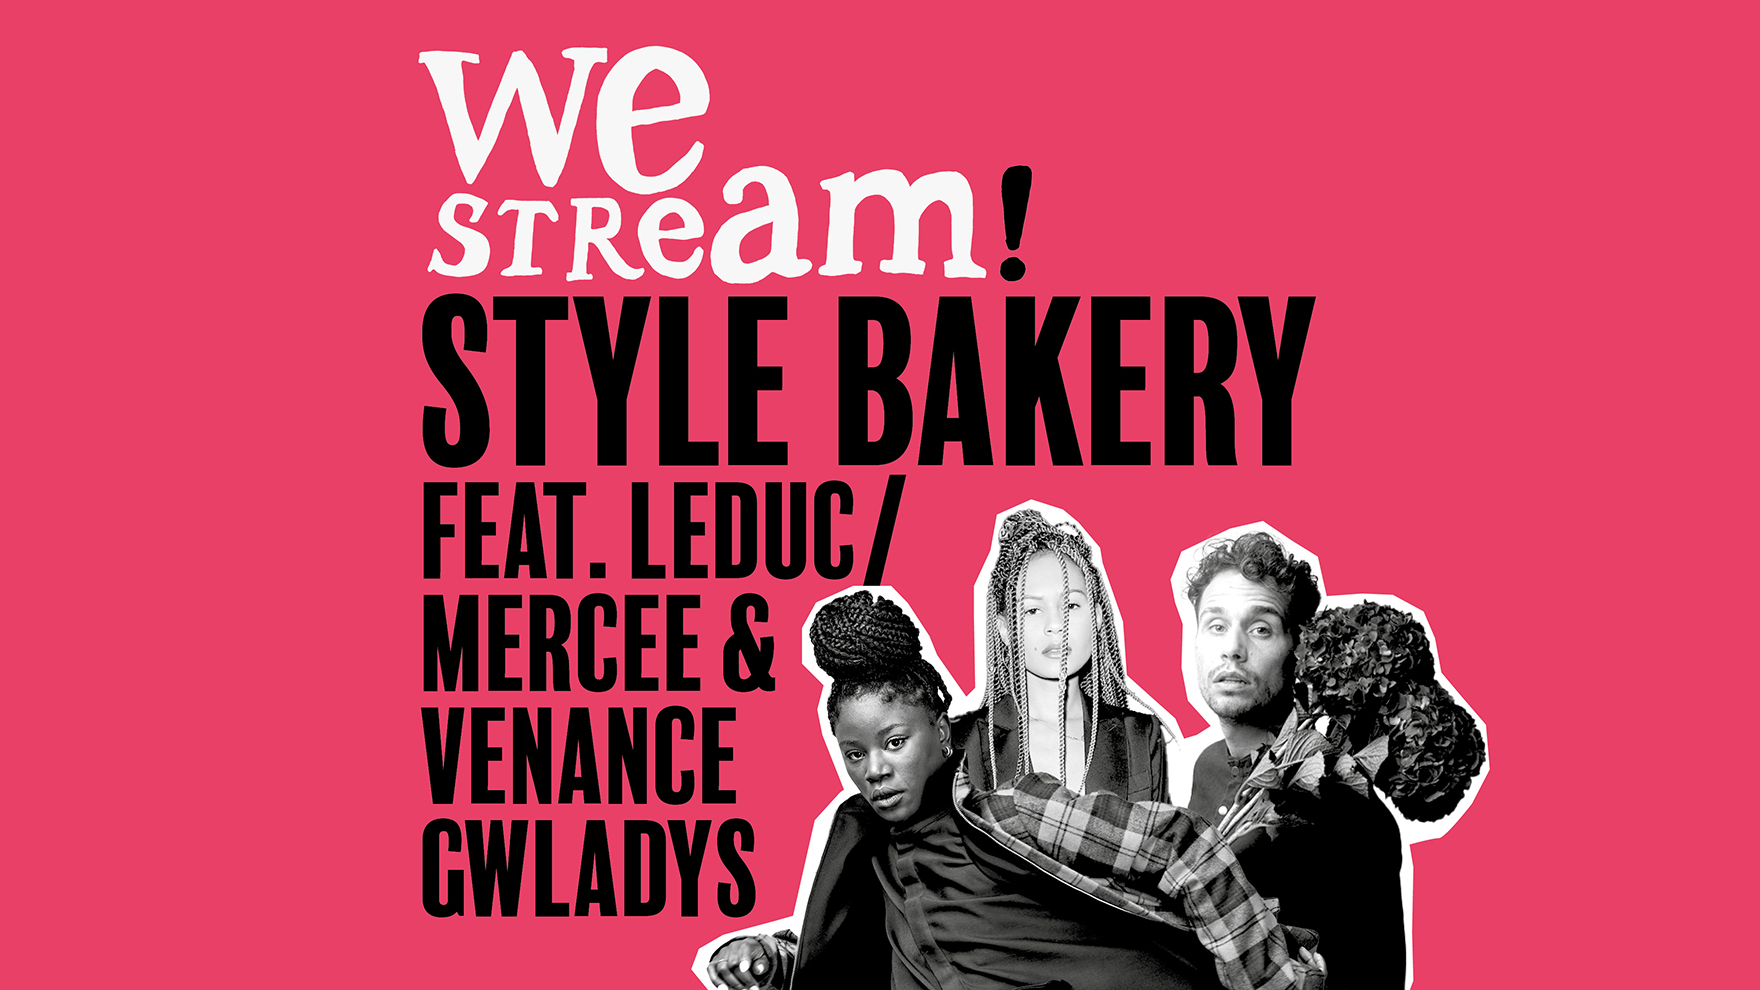 Style Bakery feat. Leduc, Mercee & Venance Gwladys